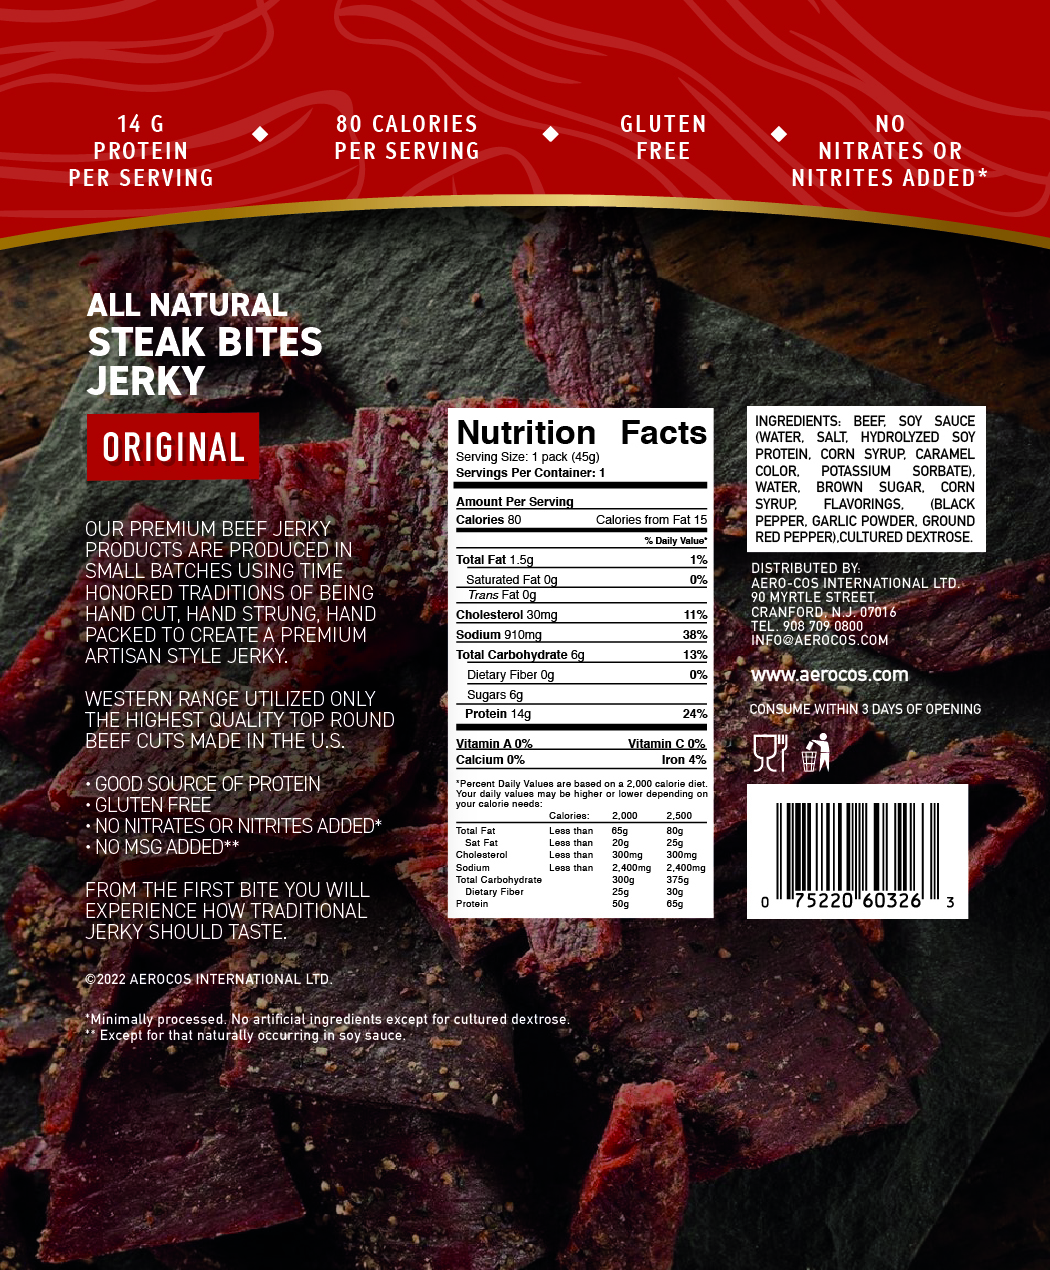 Western Range Beef Jerky Steak Bites - Original (Halal) 12 units per case 1.6 oz